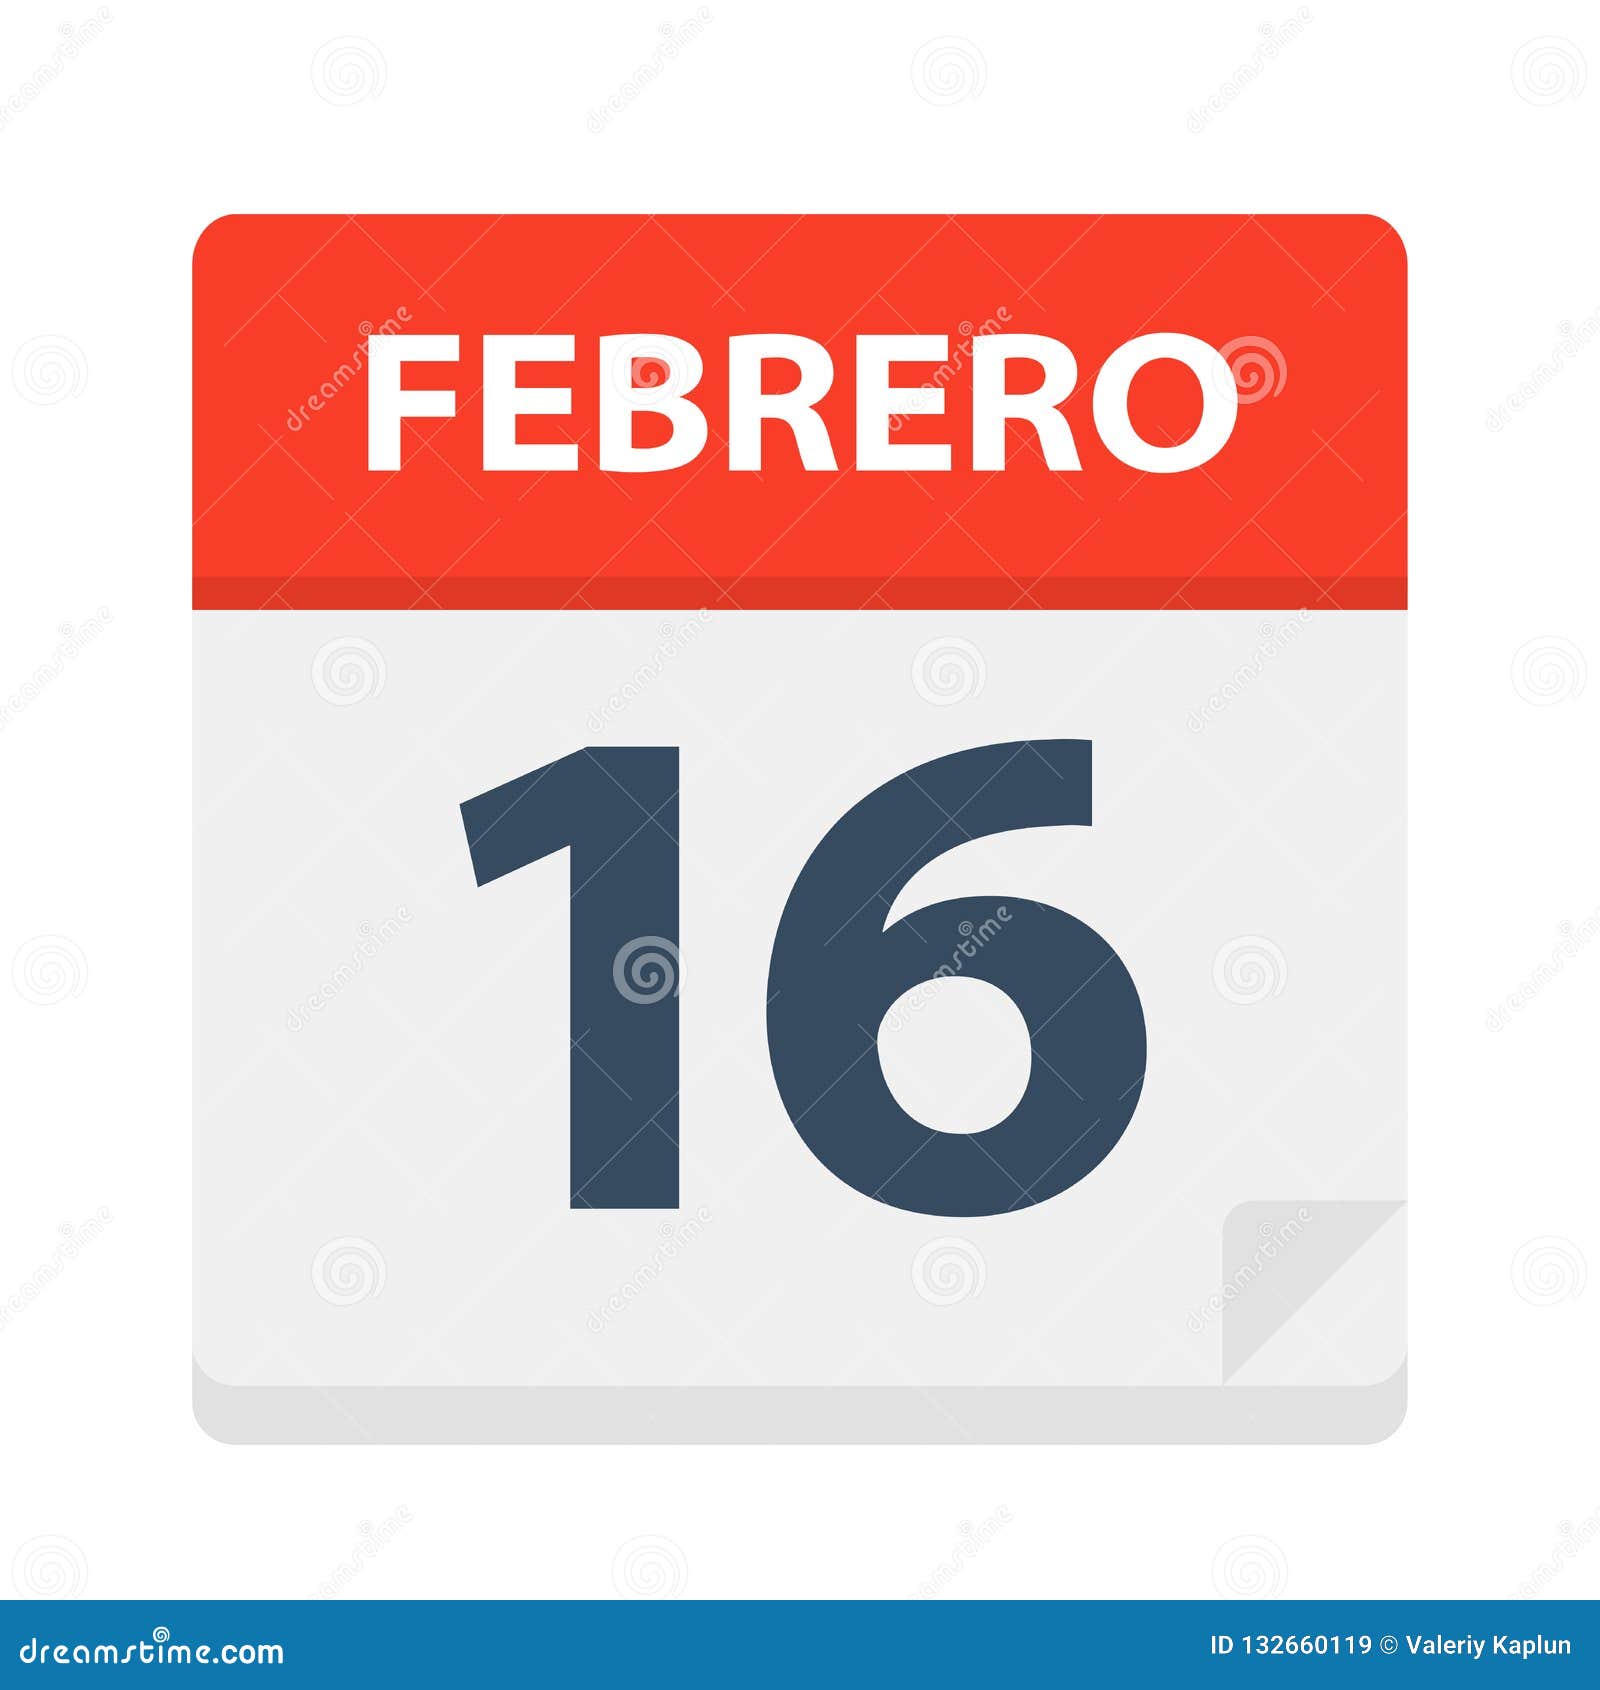 febrero 16 - calendar icon - february 16.   of spanish calendar leaf